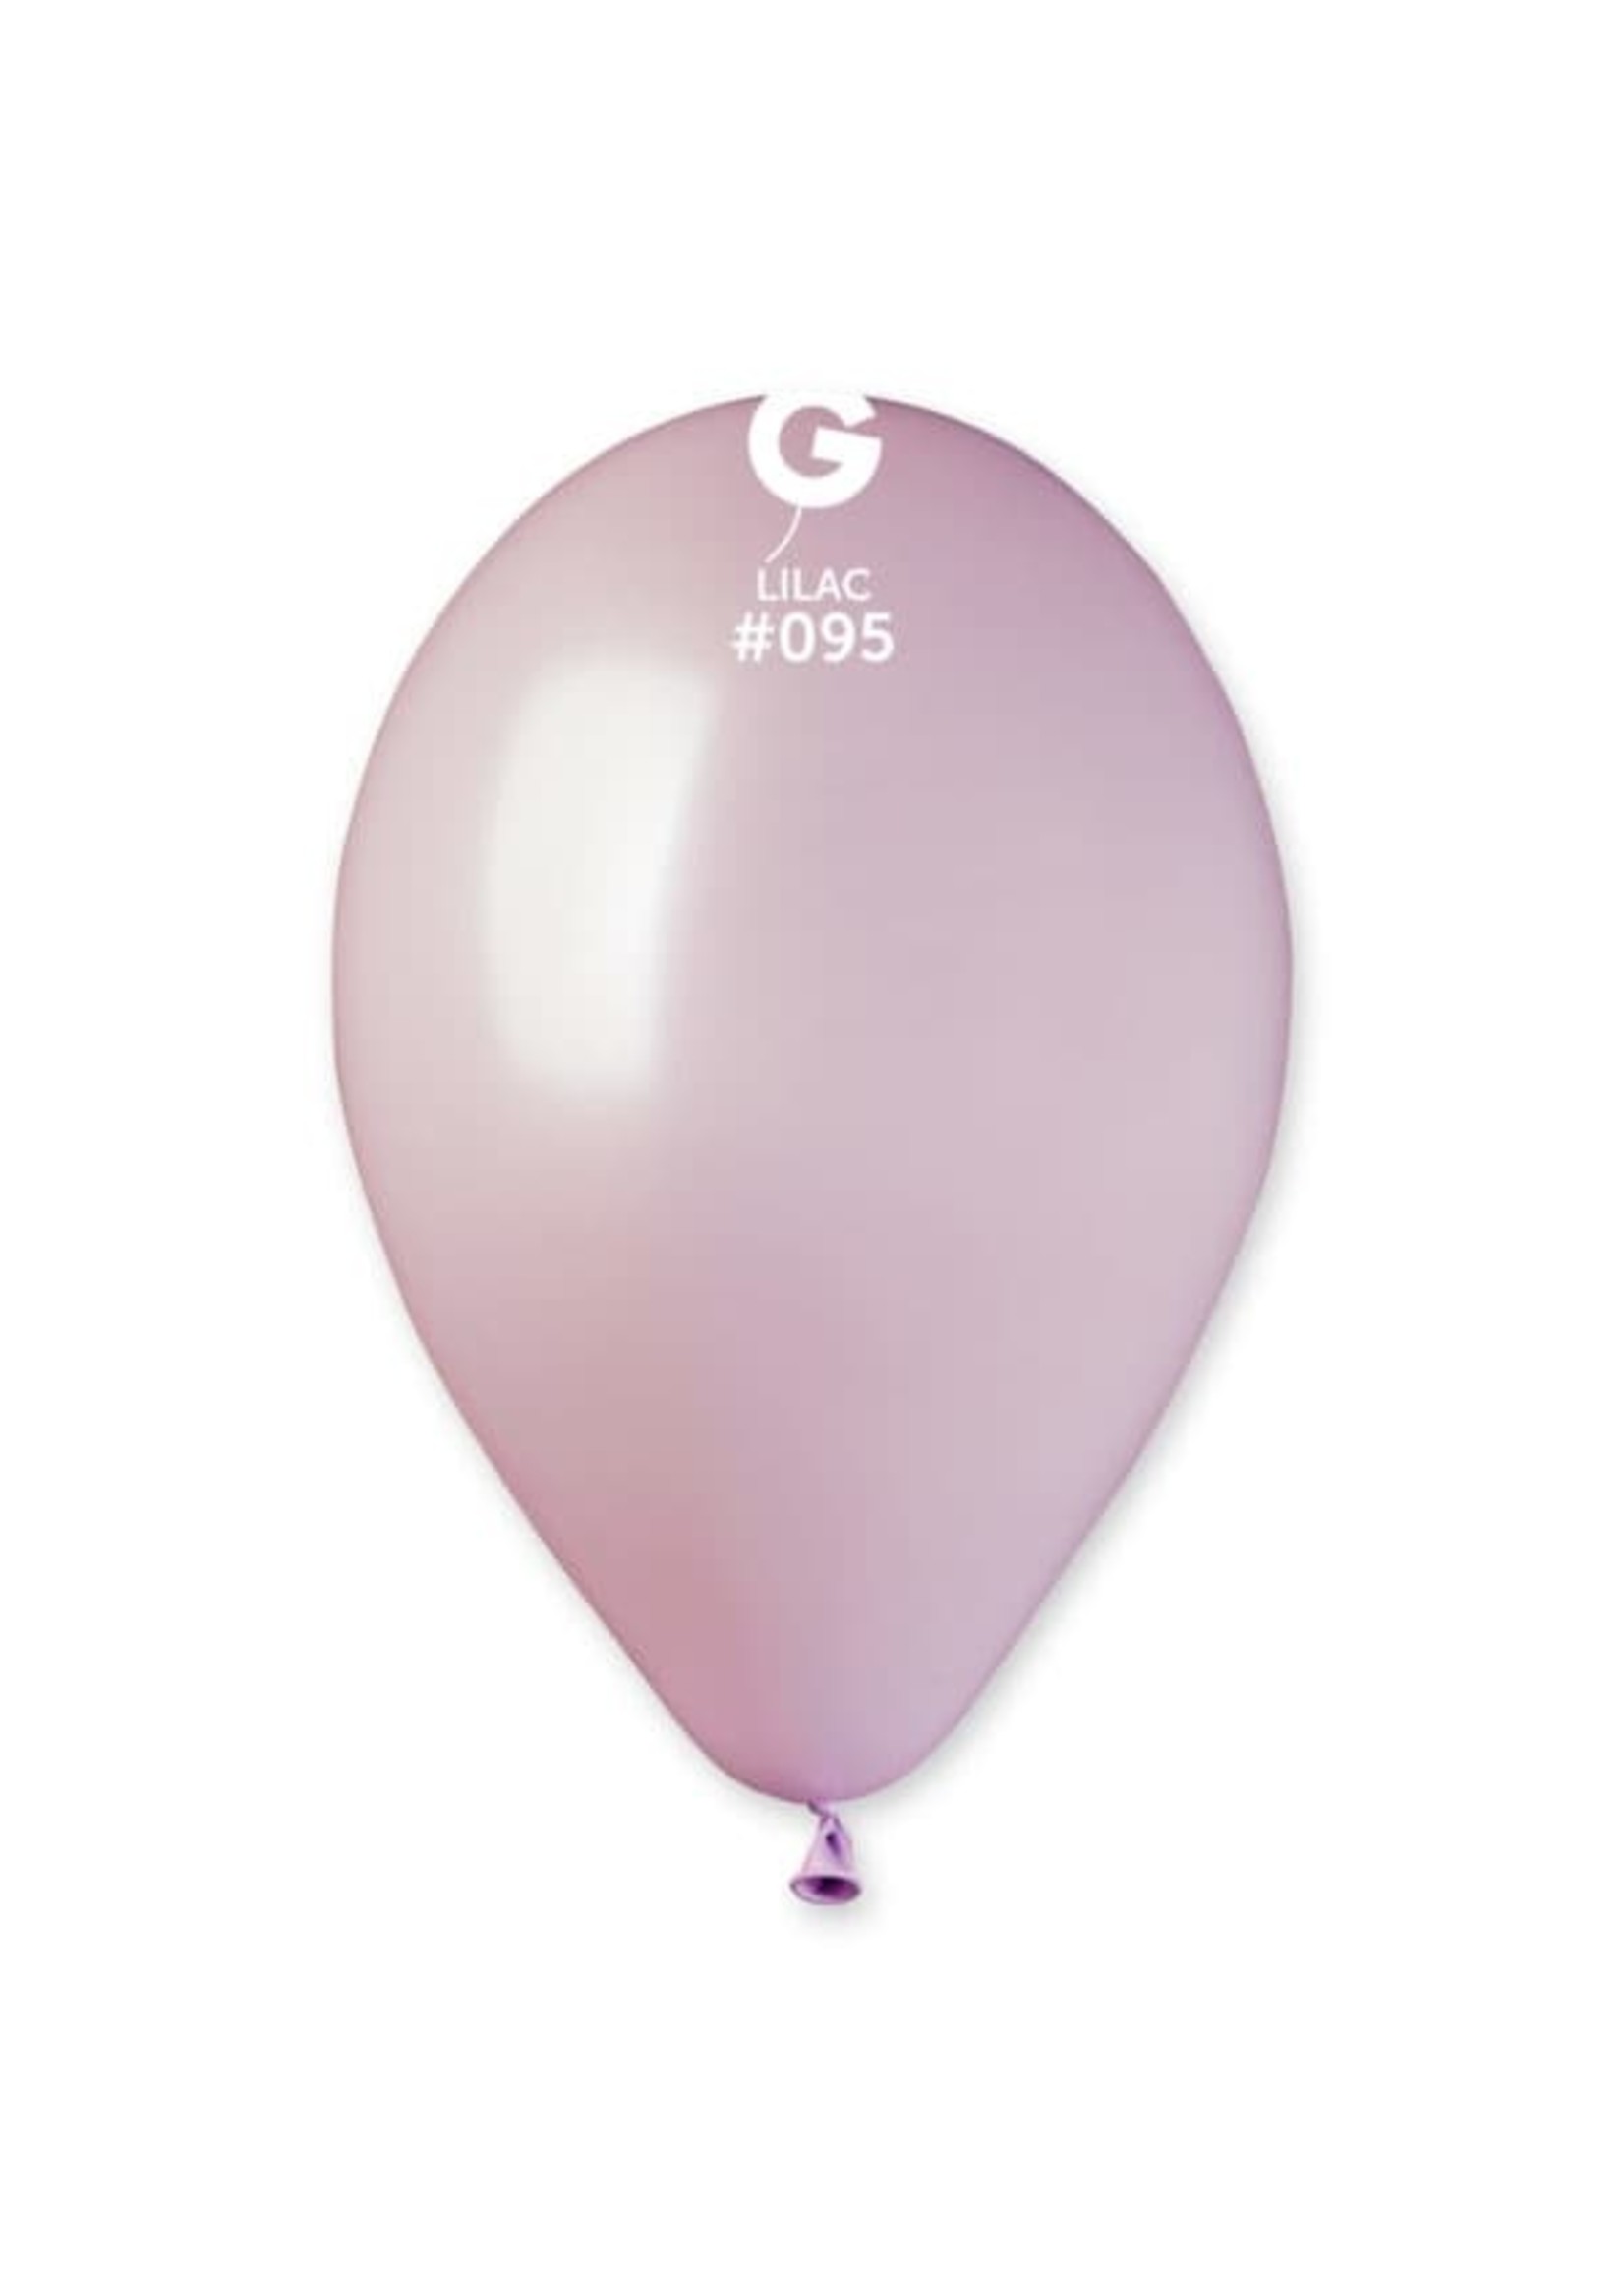 GEMAR Metallic Lilac #095 Latex Balloons, 12in, 50ct